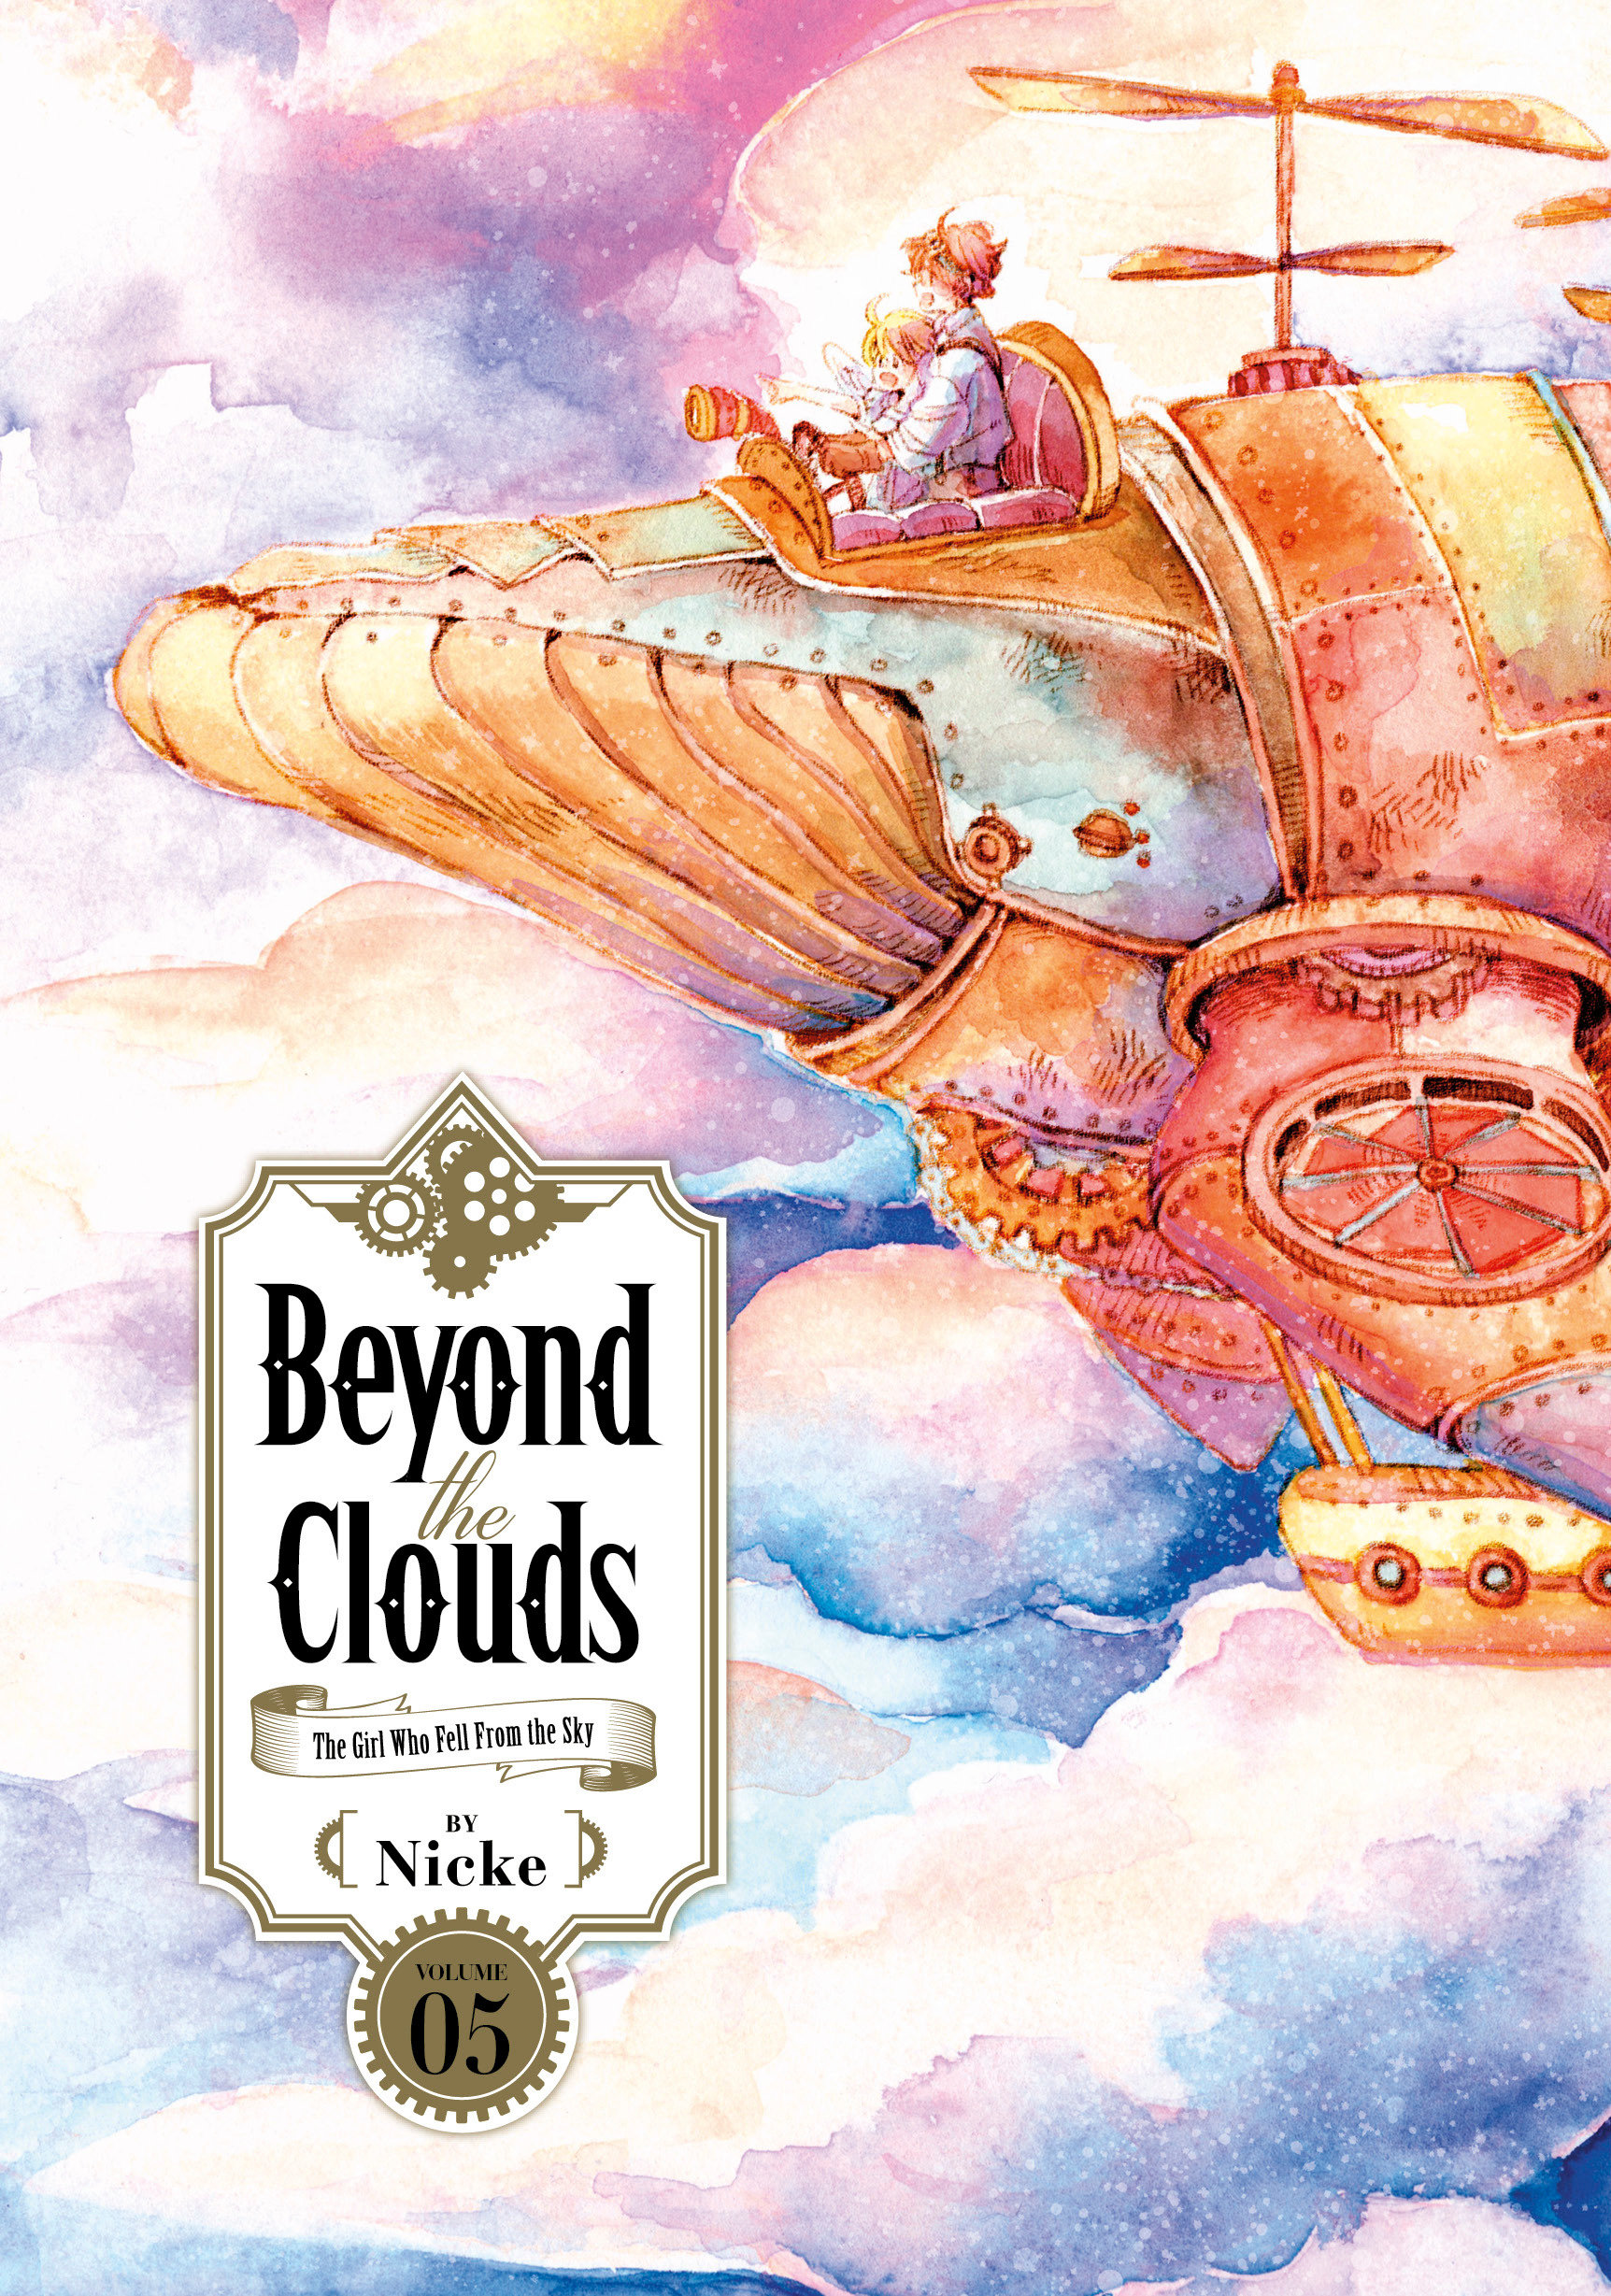 Beyond The Clouds Manga Volume 5